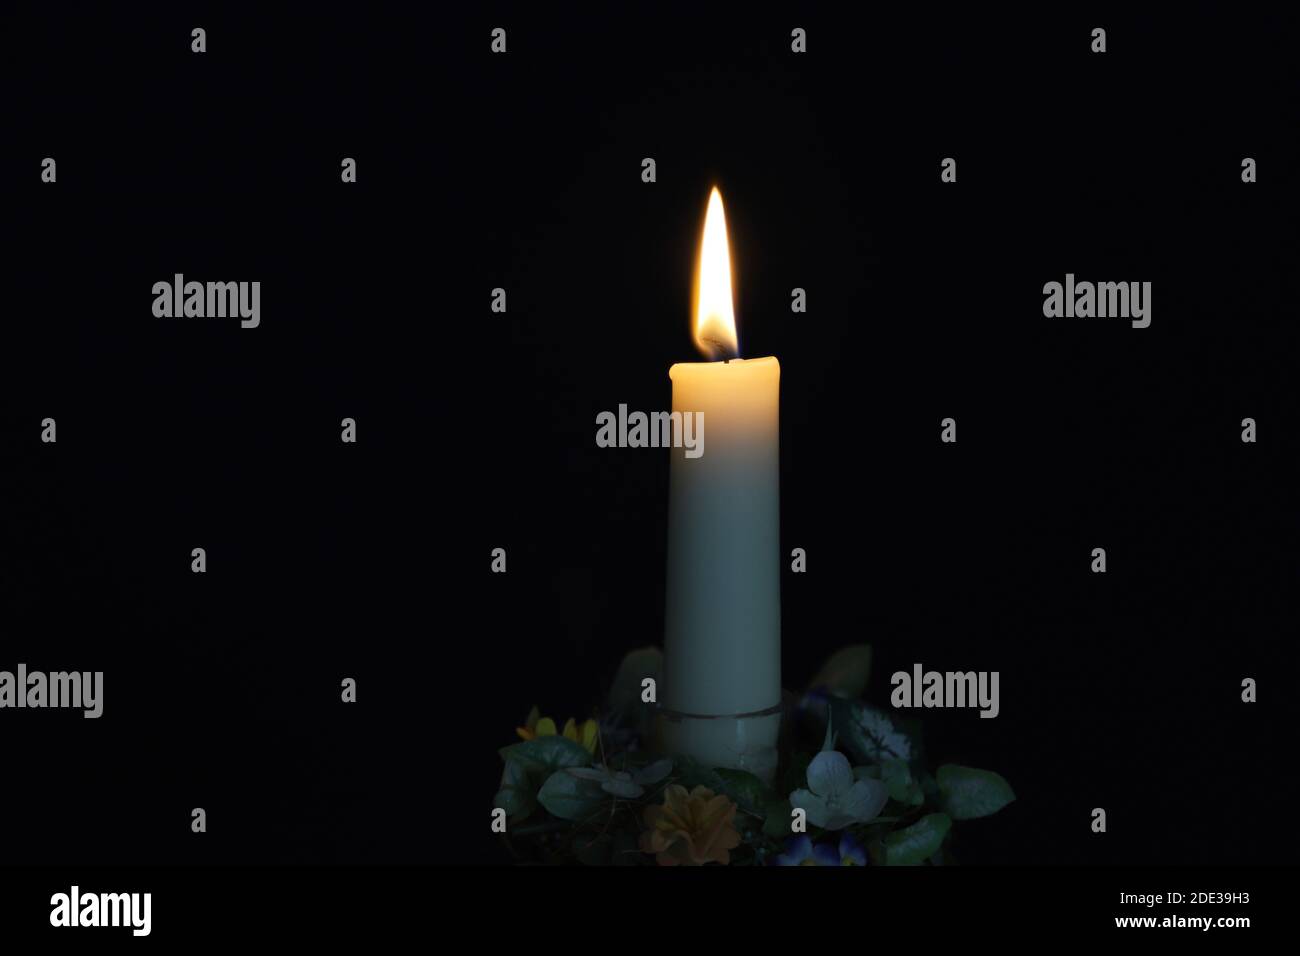 candle light on background - Alamy